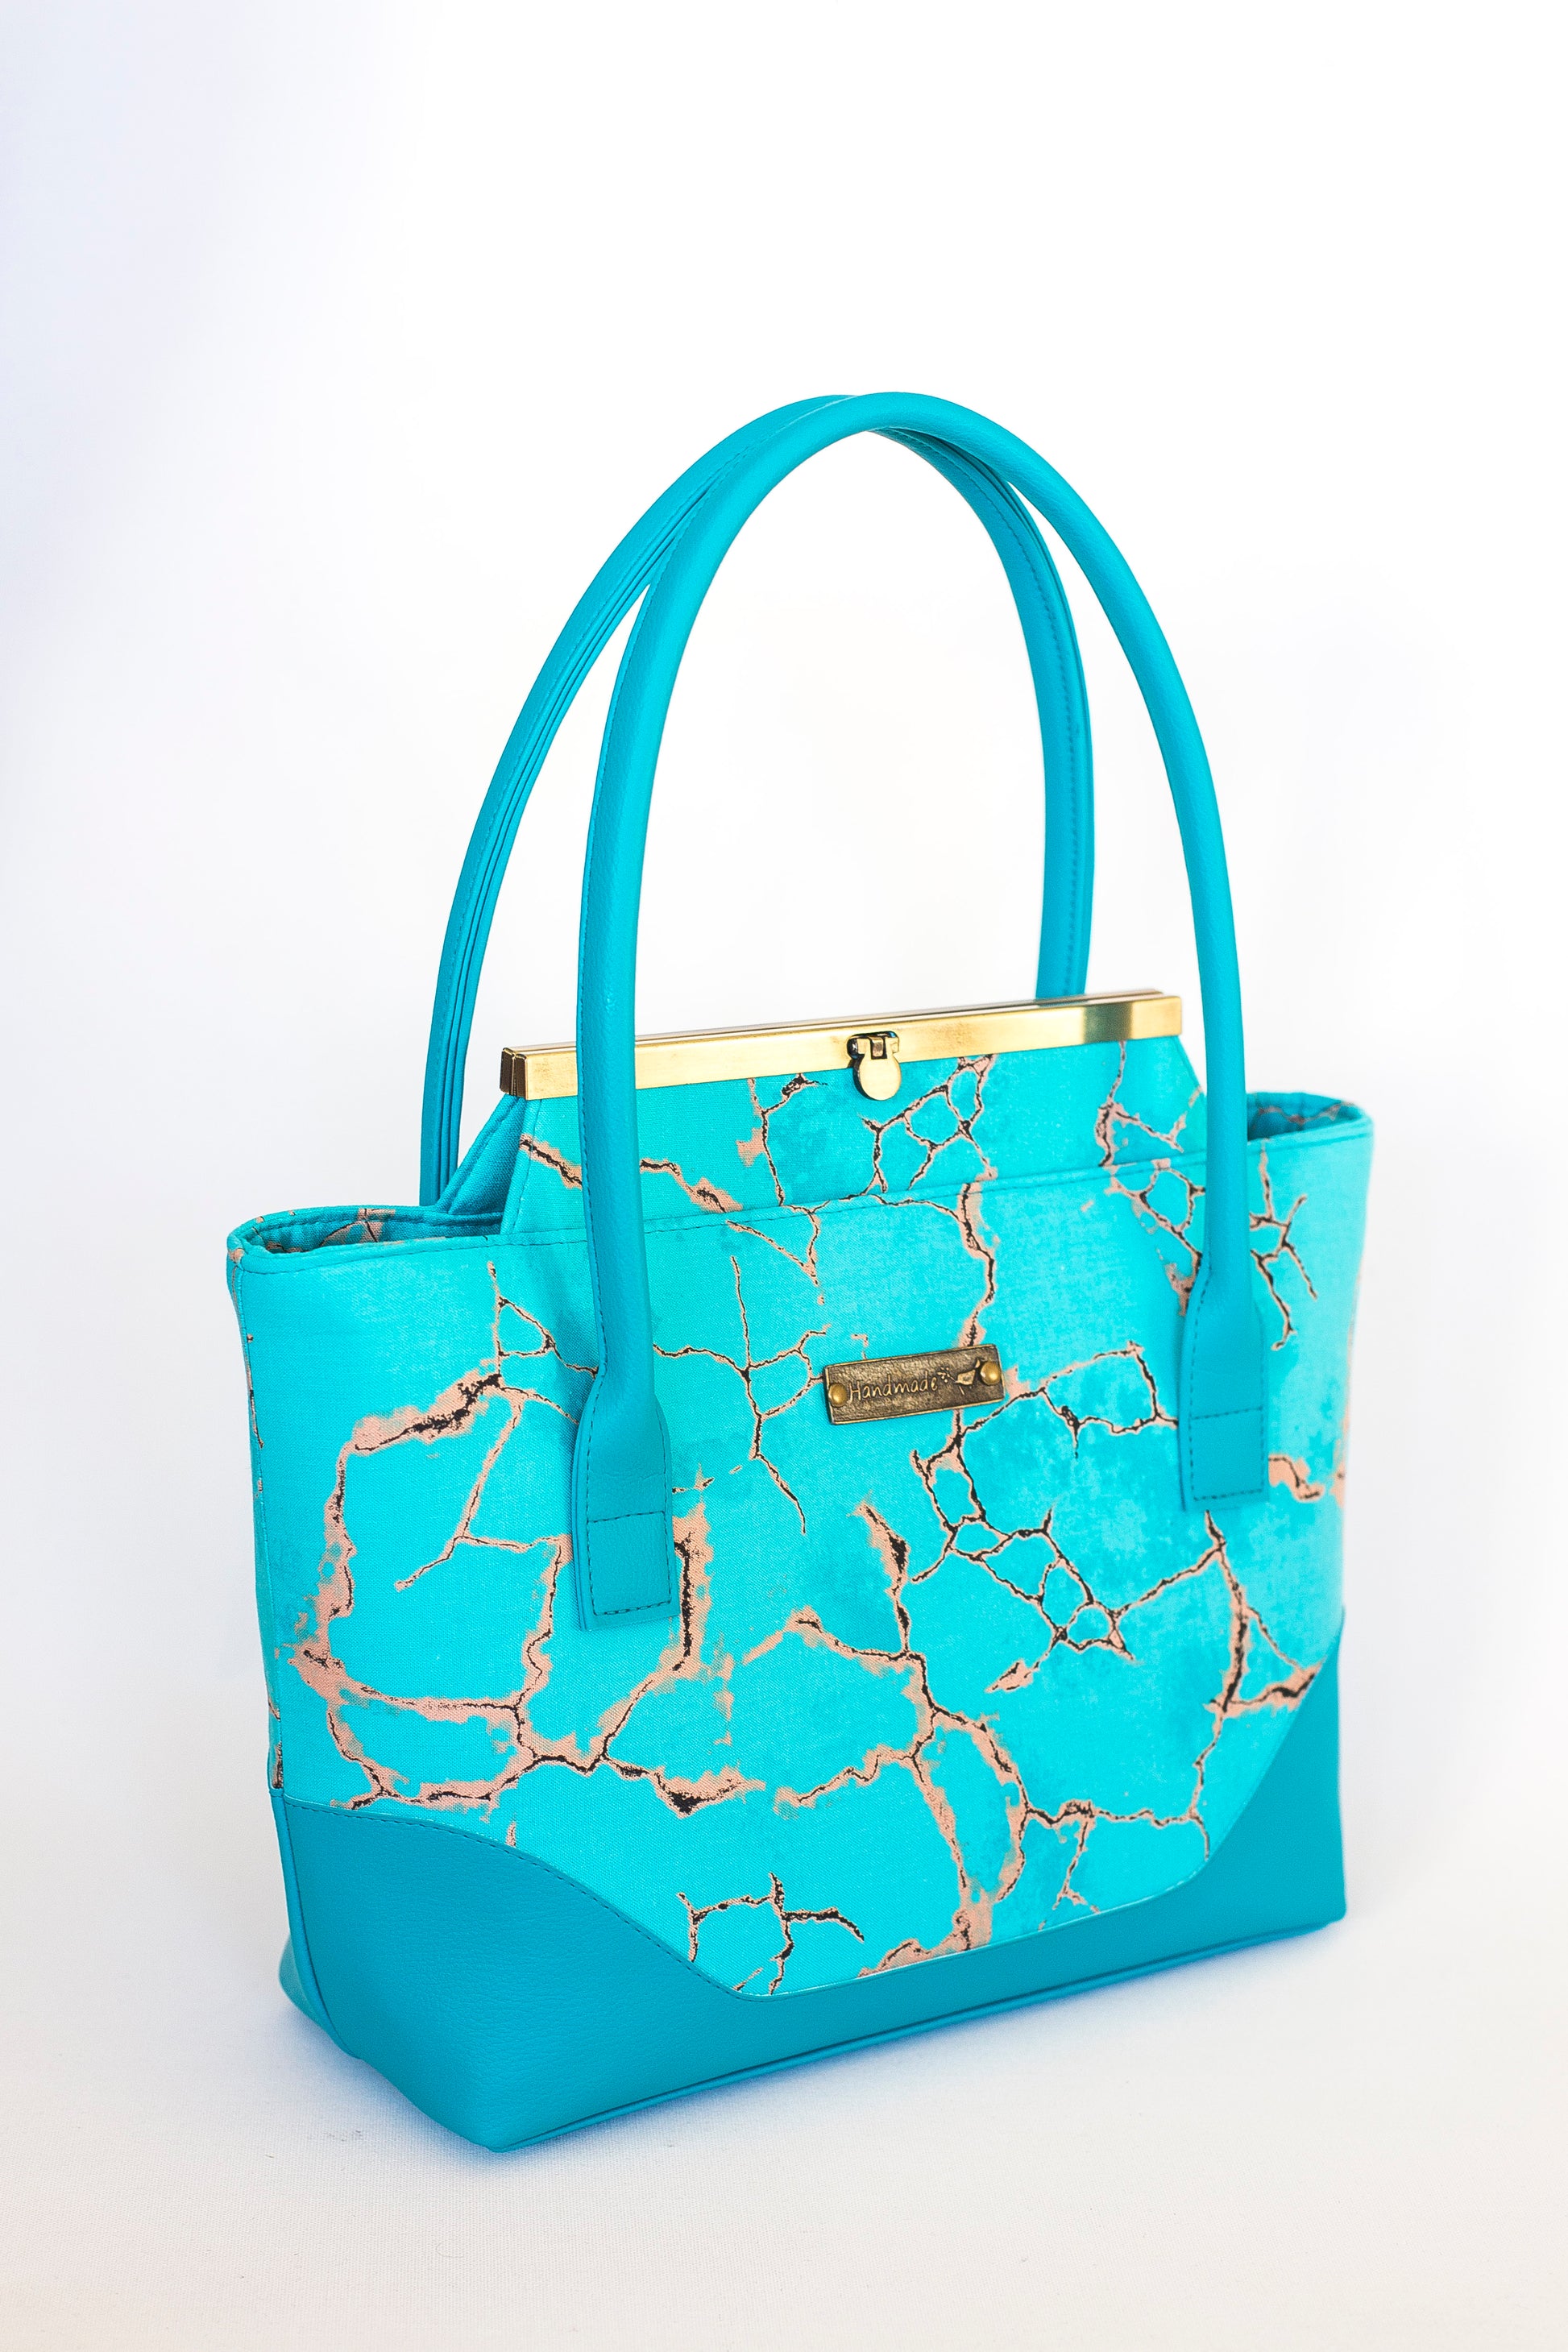 Kate Spade Vinyl Tote Shoulder Bag Tiffany Blue Purse with Heart pattern